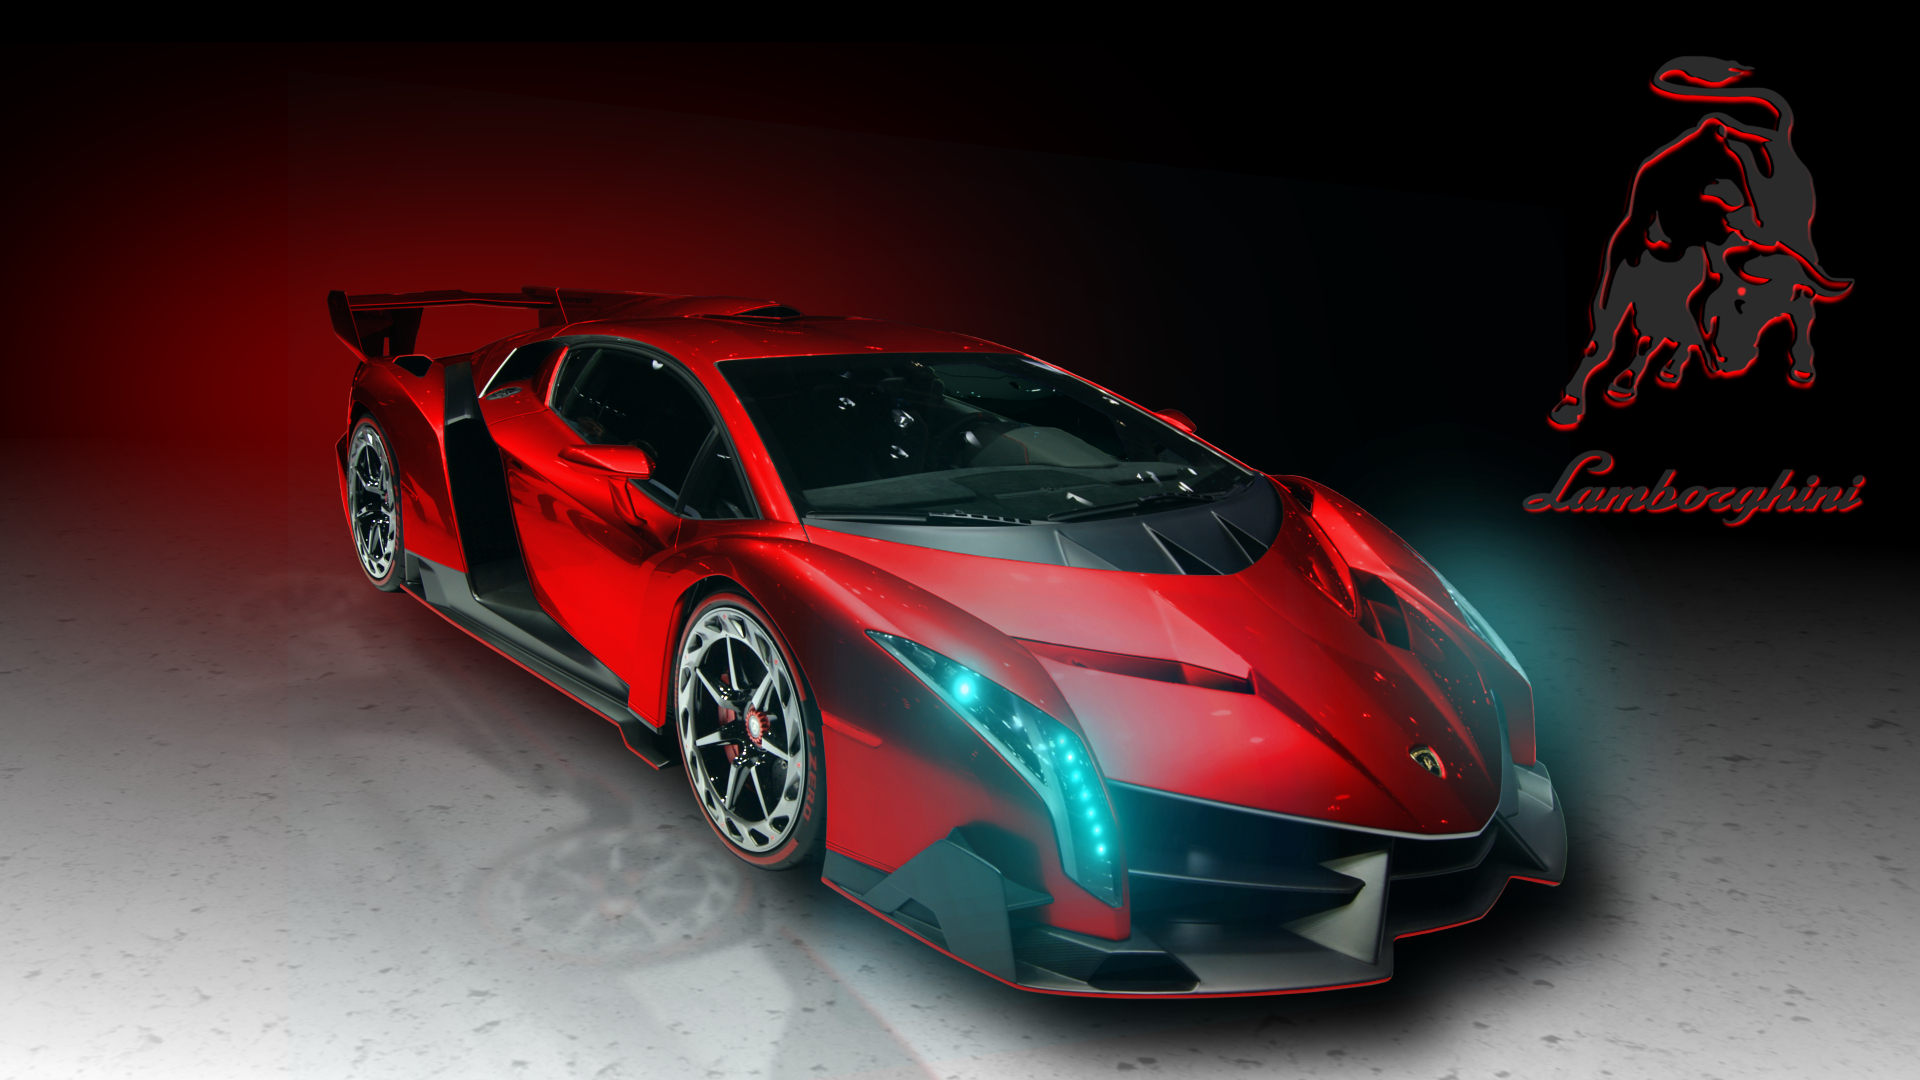 Lamborghini Veneno Wallpaper High Quality Resolution At Cars